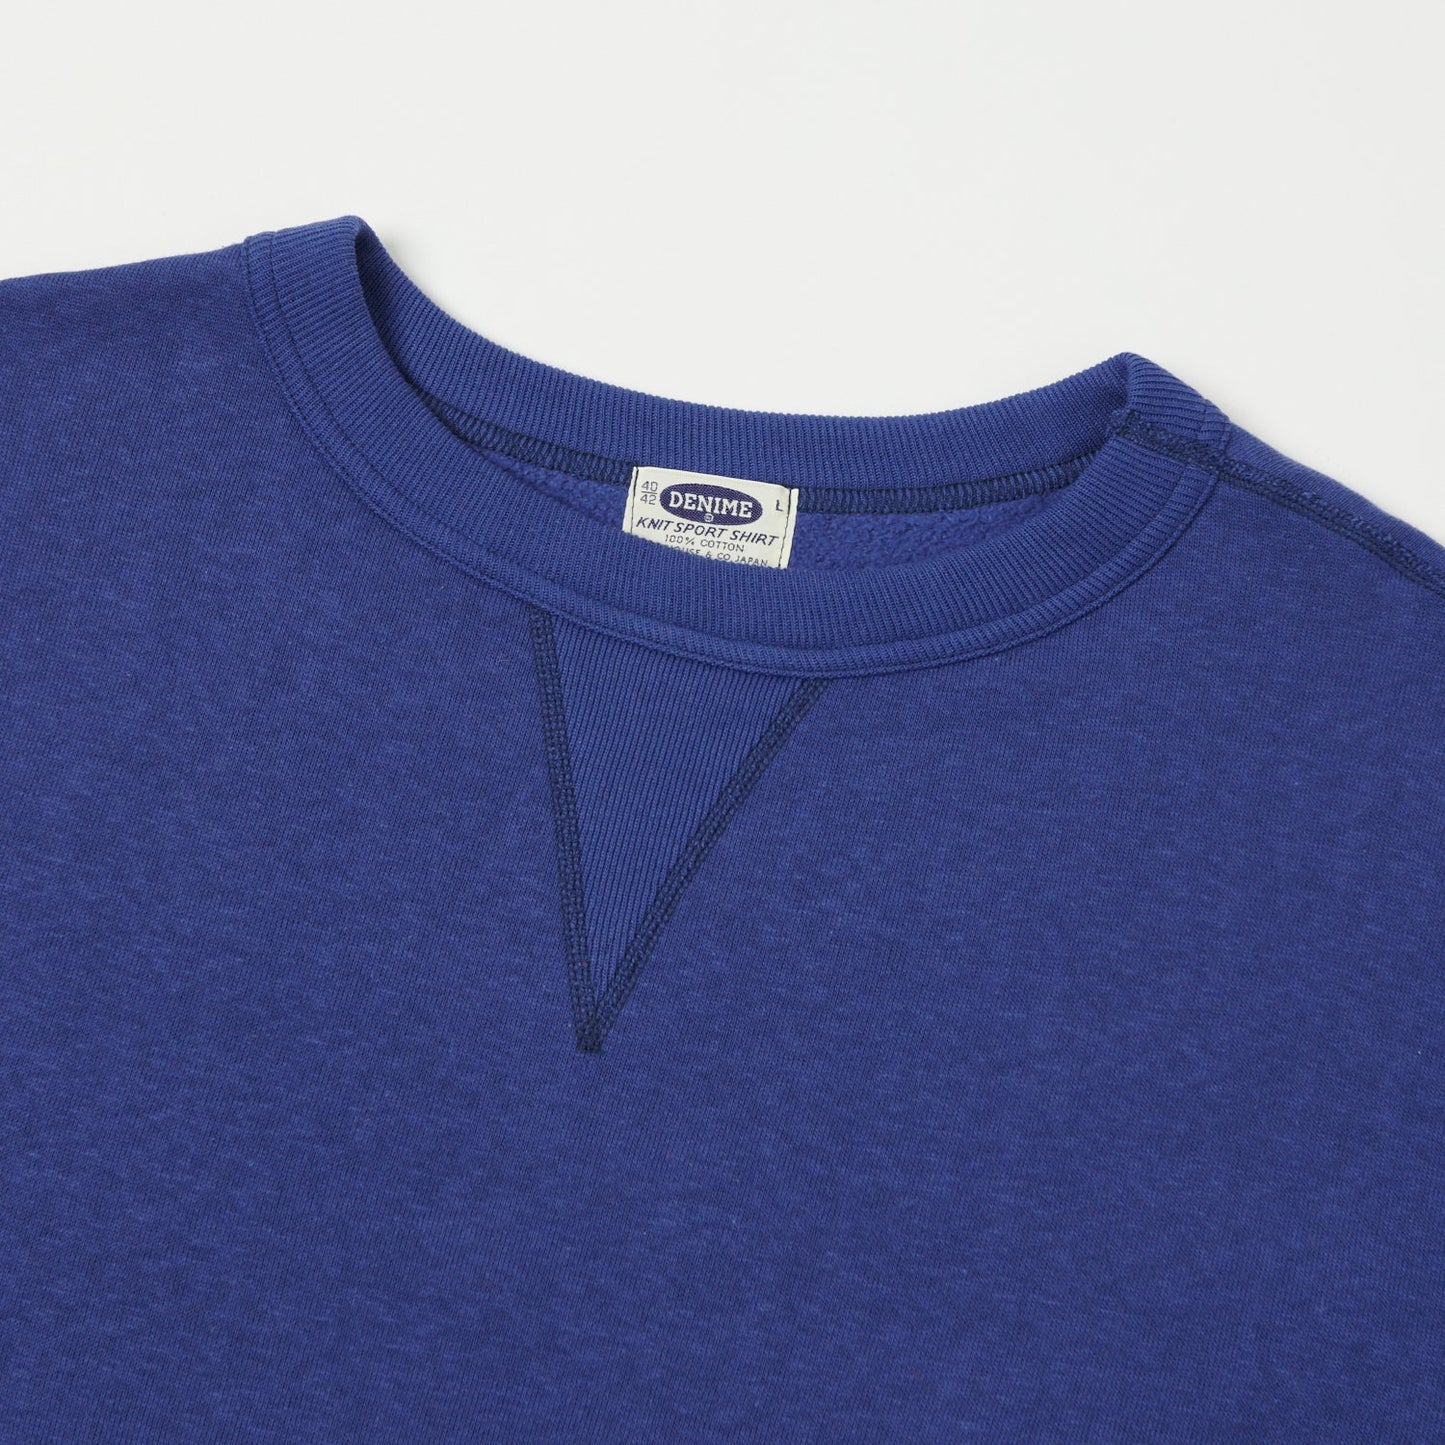 Denime - Lot 260- 4-Needle Sweatshirt Blue